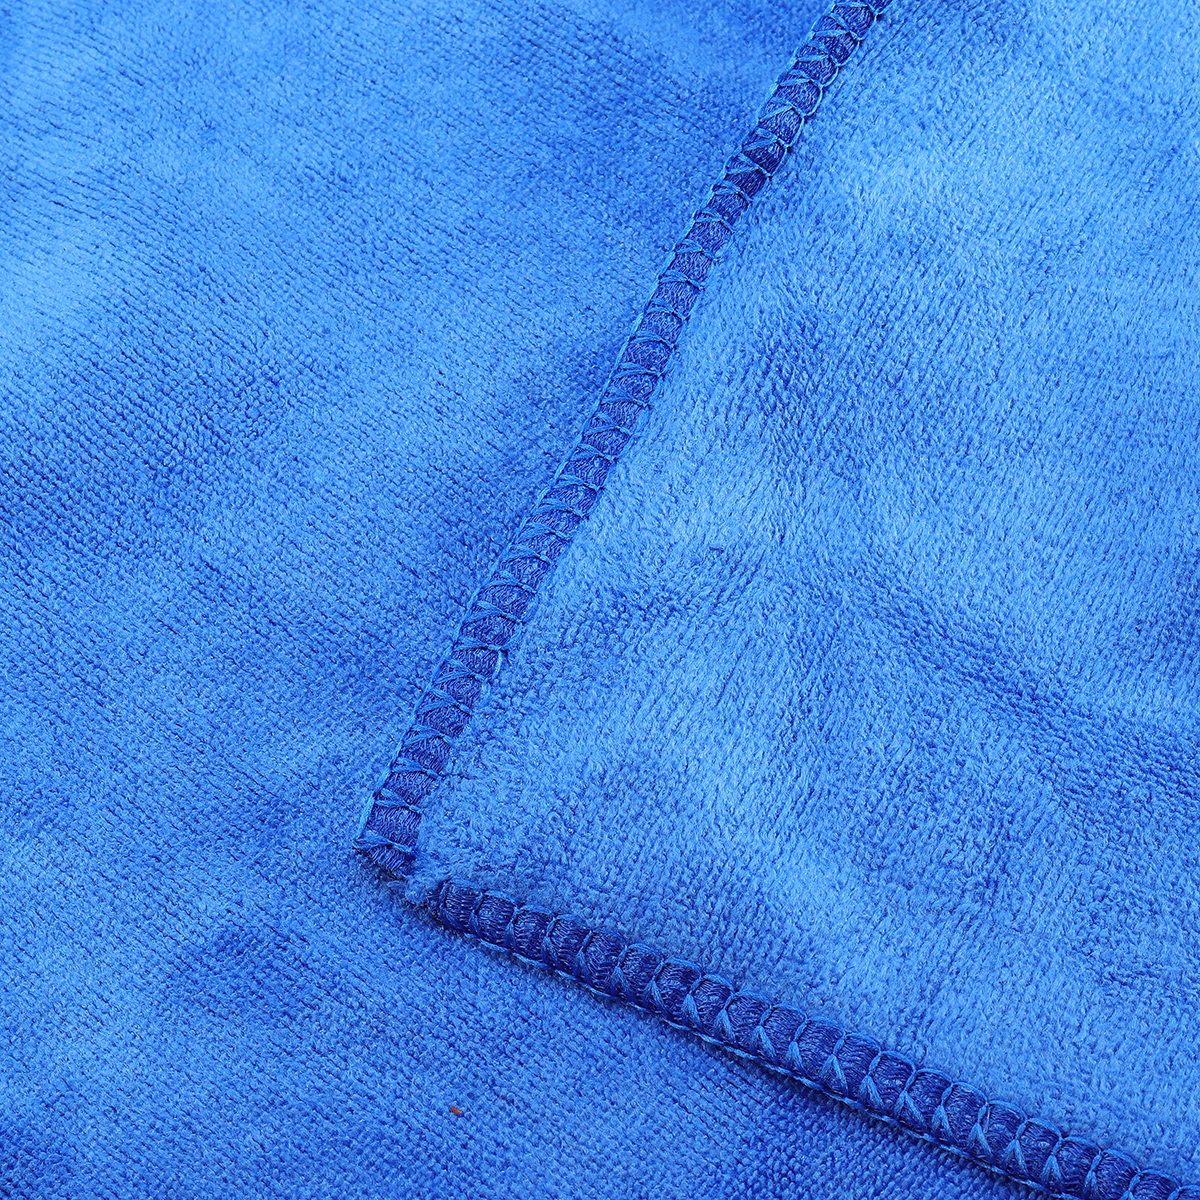 10PCS Microfiber Cleaning Cloths Washing Towel Blue for Car Polishing Wax Detailing Drying - Auto GoShop